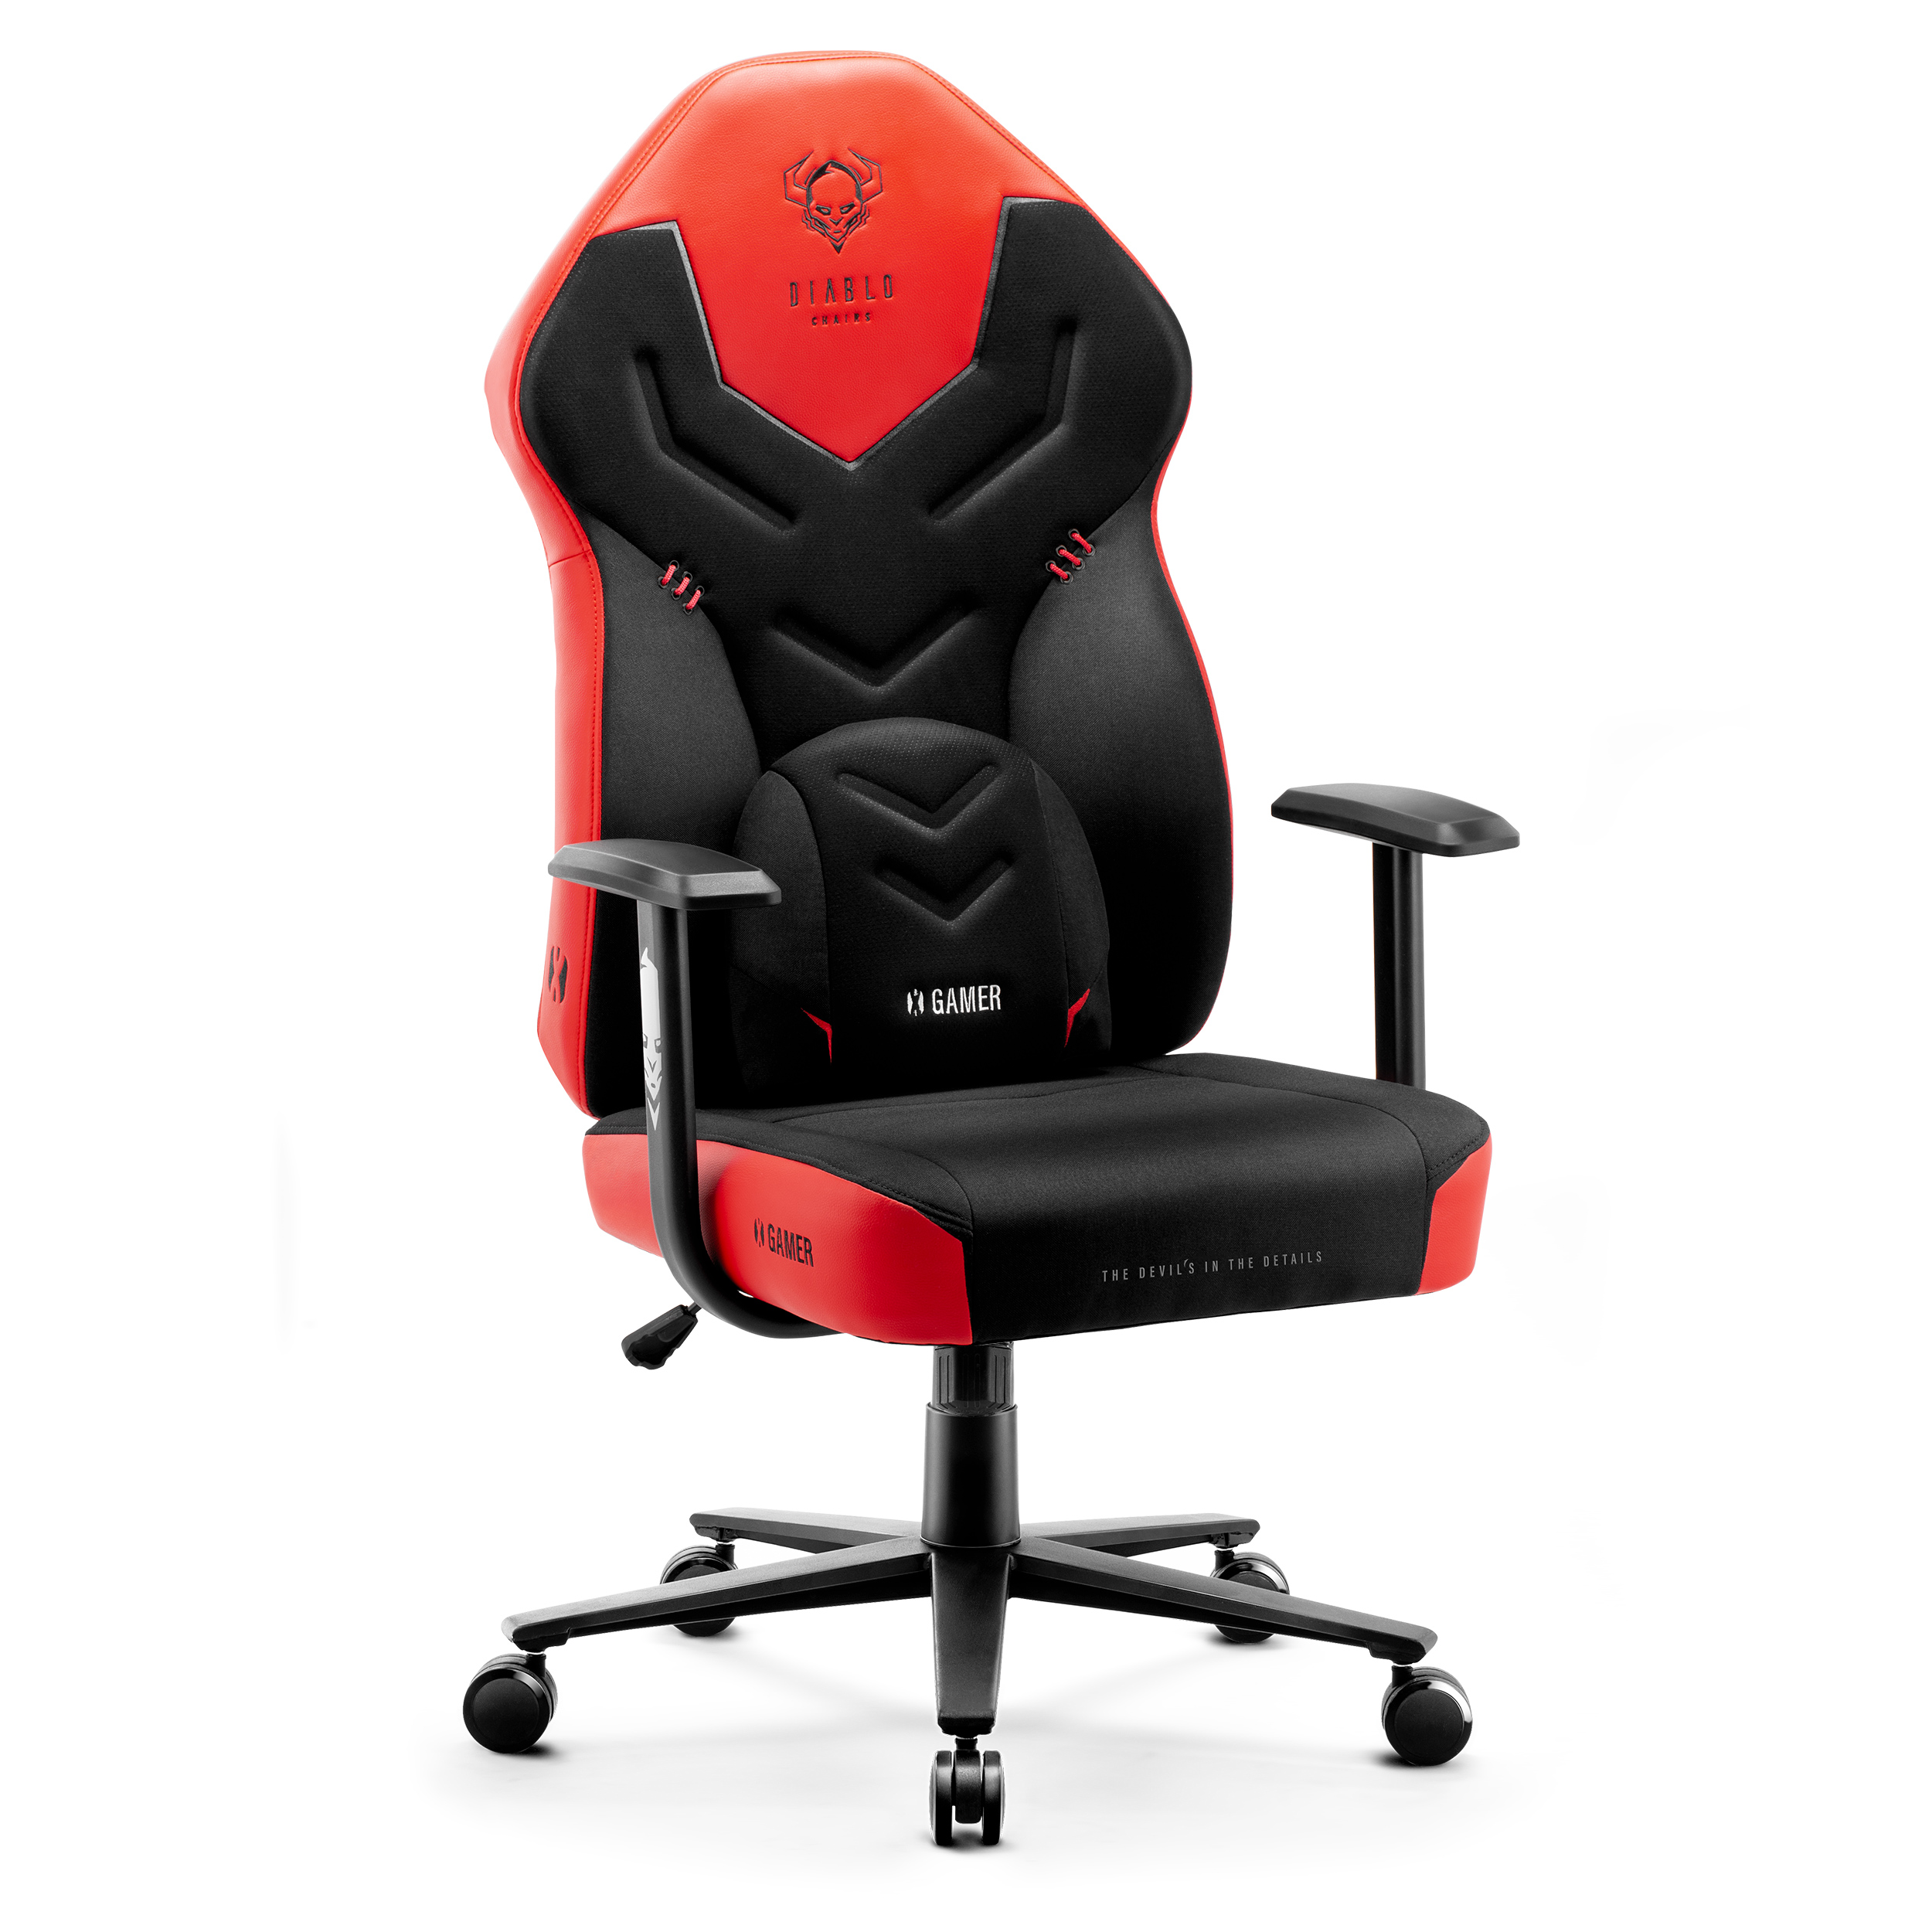 DIABLO Chair, STUHL X-GAMER CHAIRS NORMAL GAMING 2.0 black/red Gaming